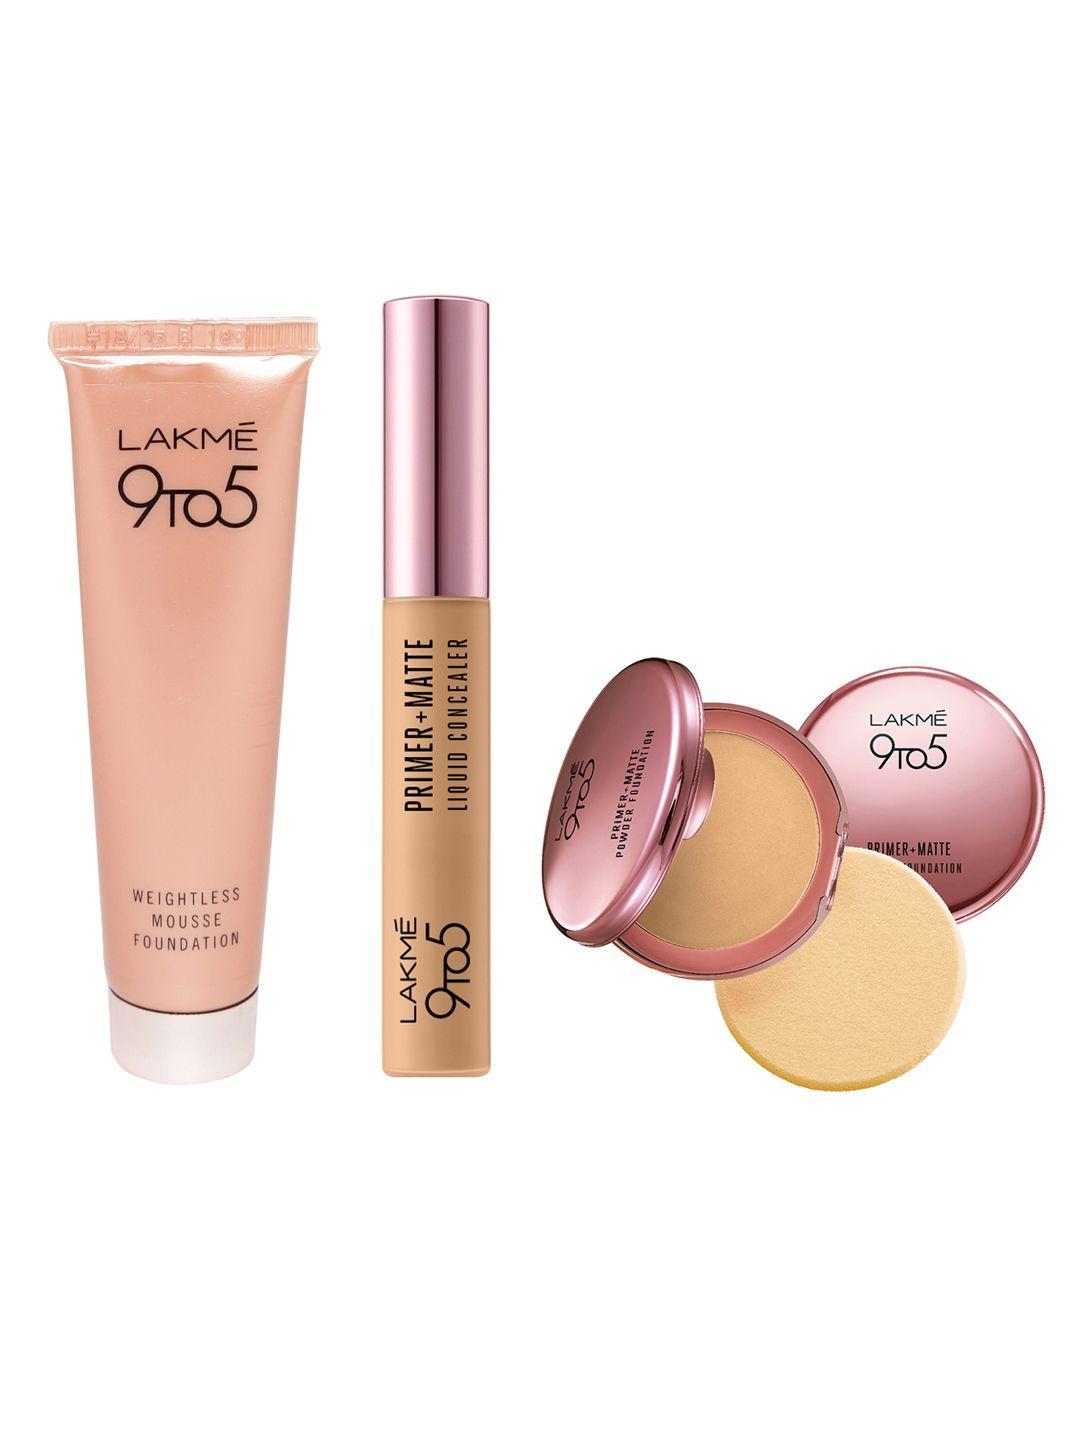 lakme 9to5 makeup set - concealer + mousse foundation + compact